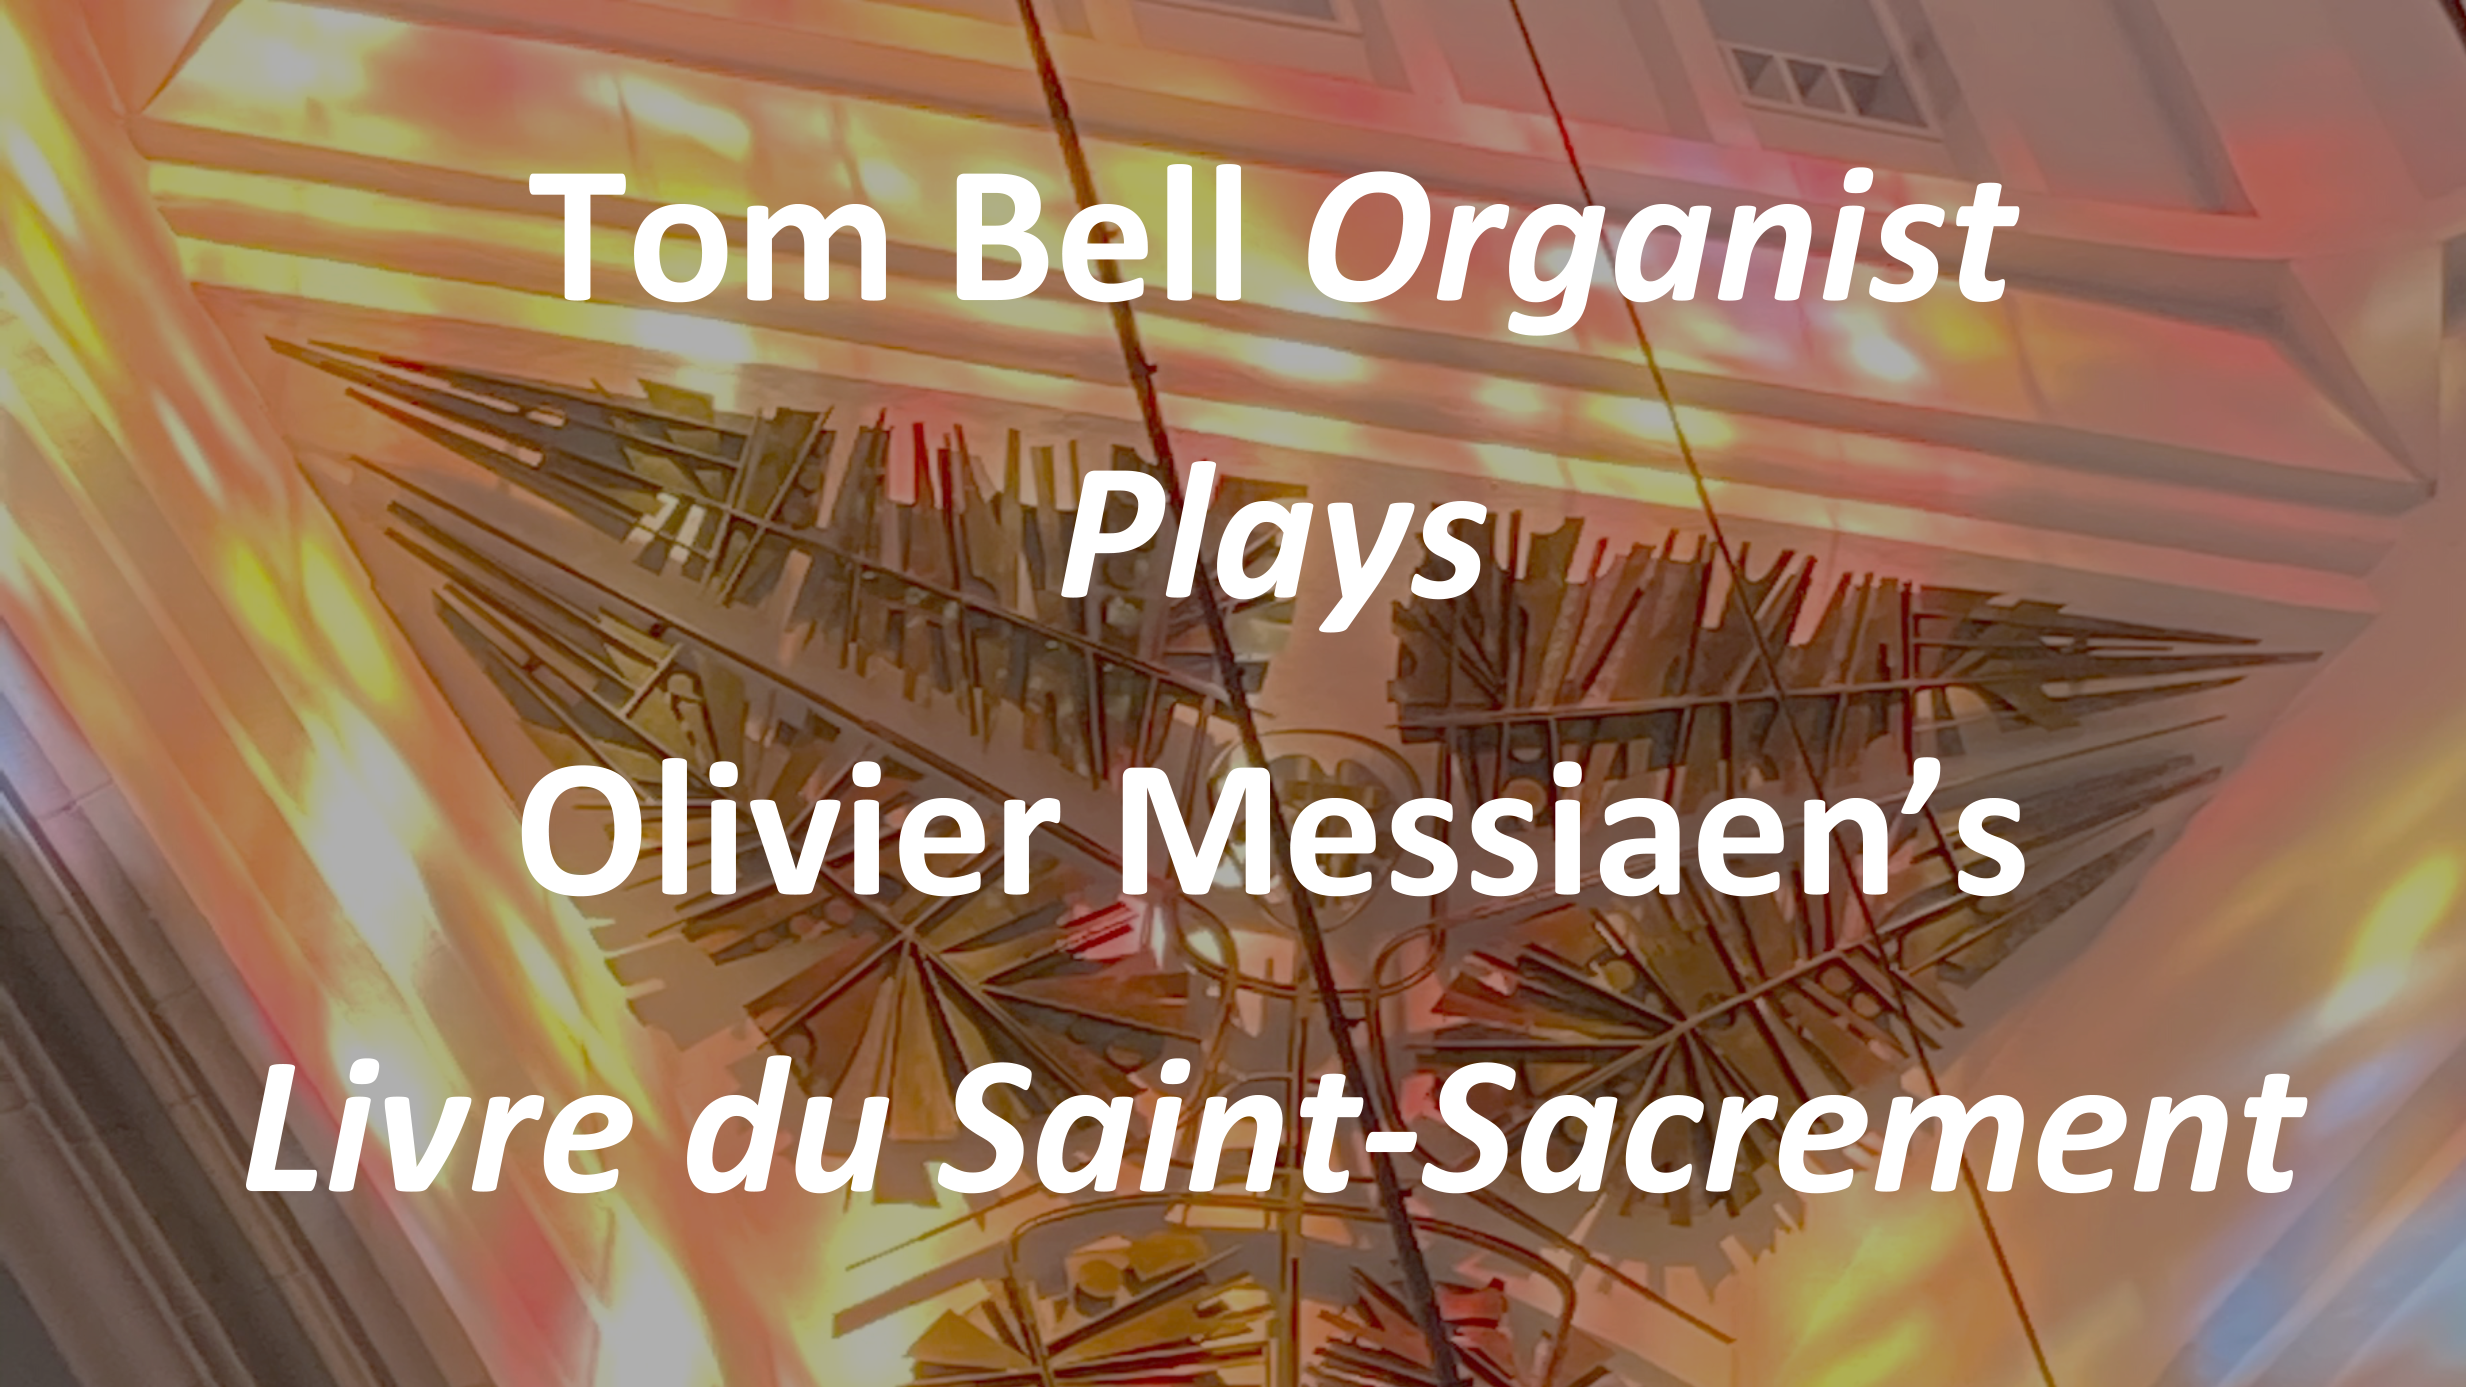 Tom Bell Organist Plays Olivier Messiaen’s Livre du Saint-Sacrement, announcement for Blackburn Cathedral